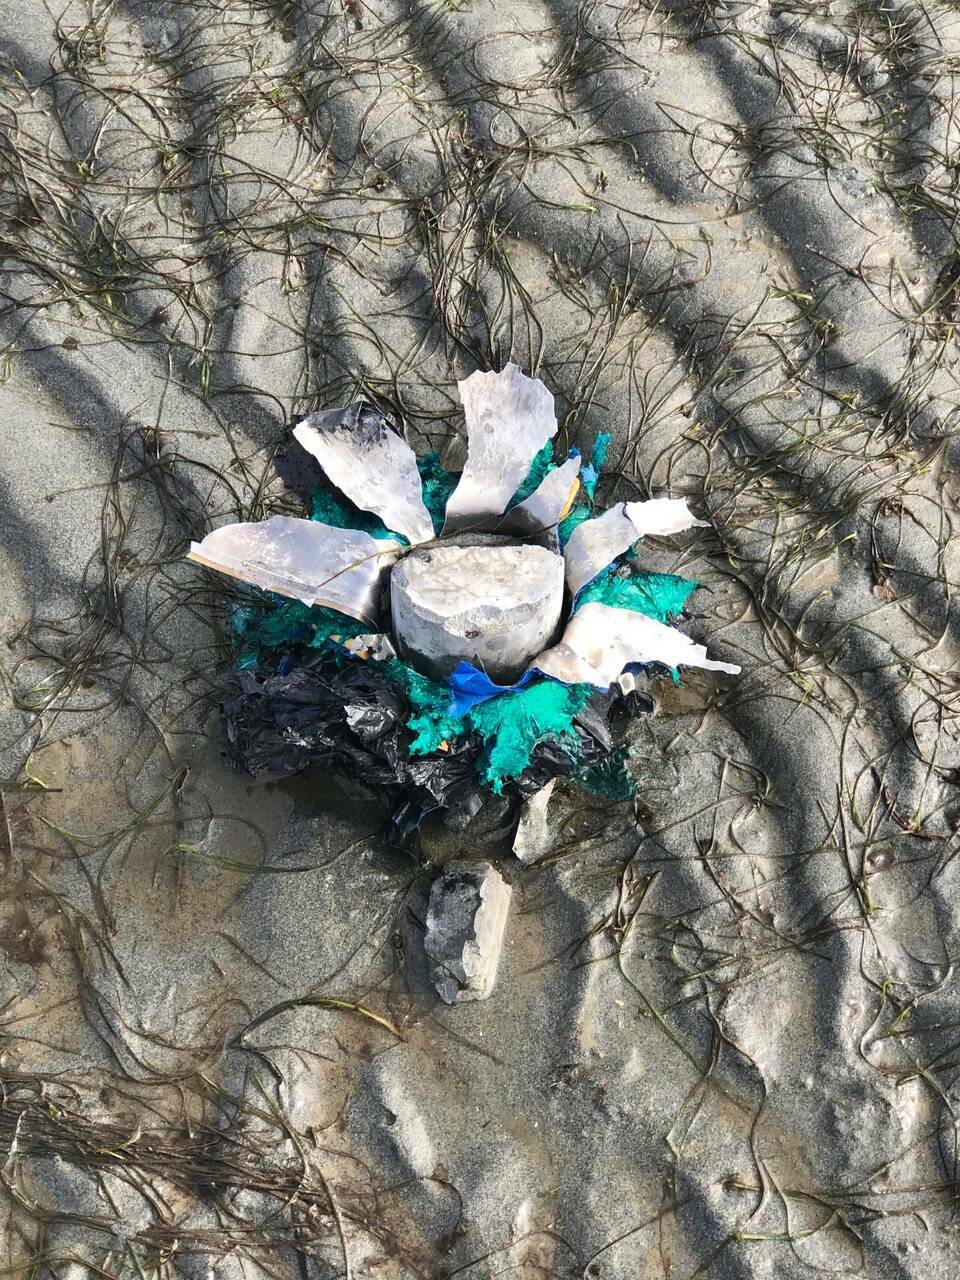 Contributed photo Debris found on Cresent Beach